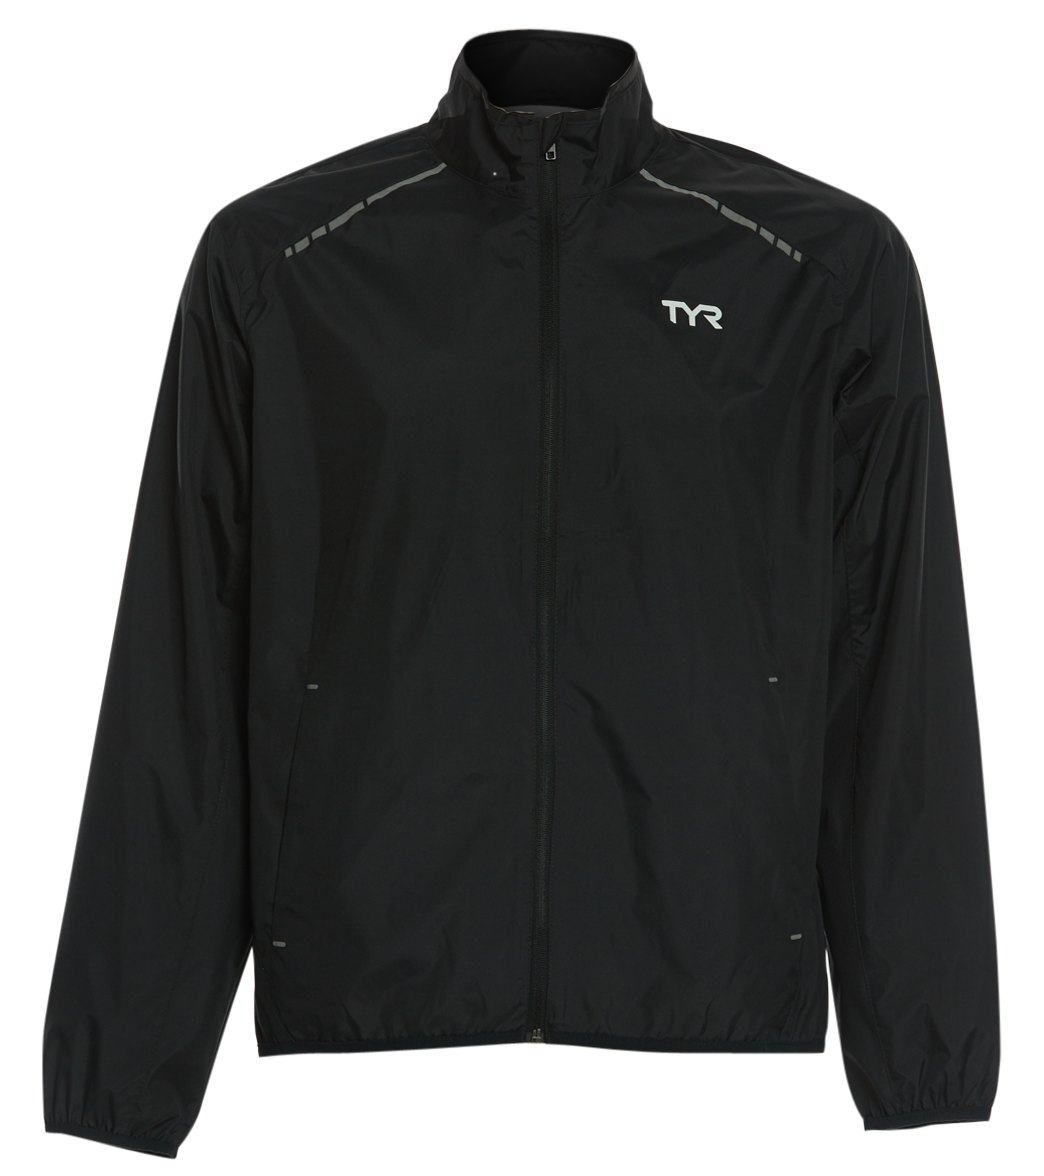 TYR Men's Alliance Windbreaker Jacket - Black Large Polyester - Swimoutlet.com